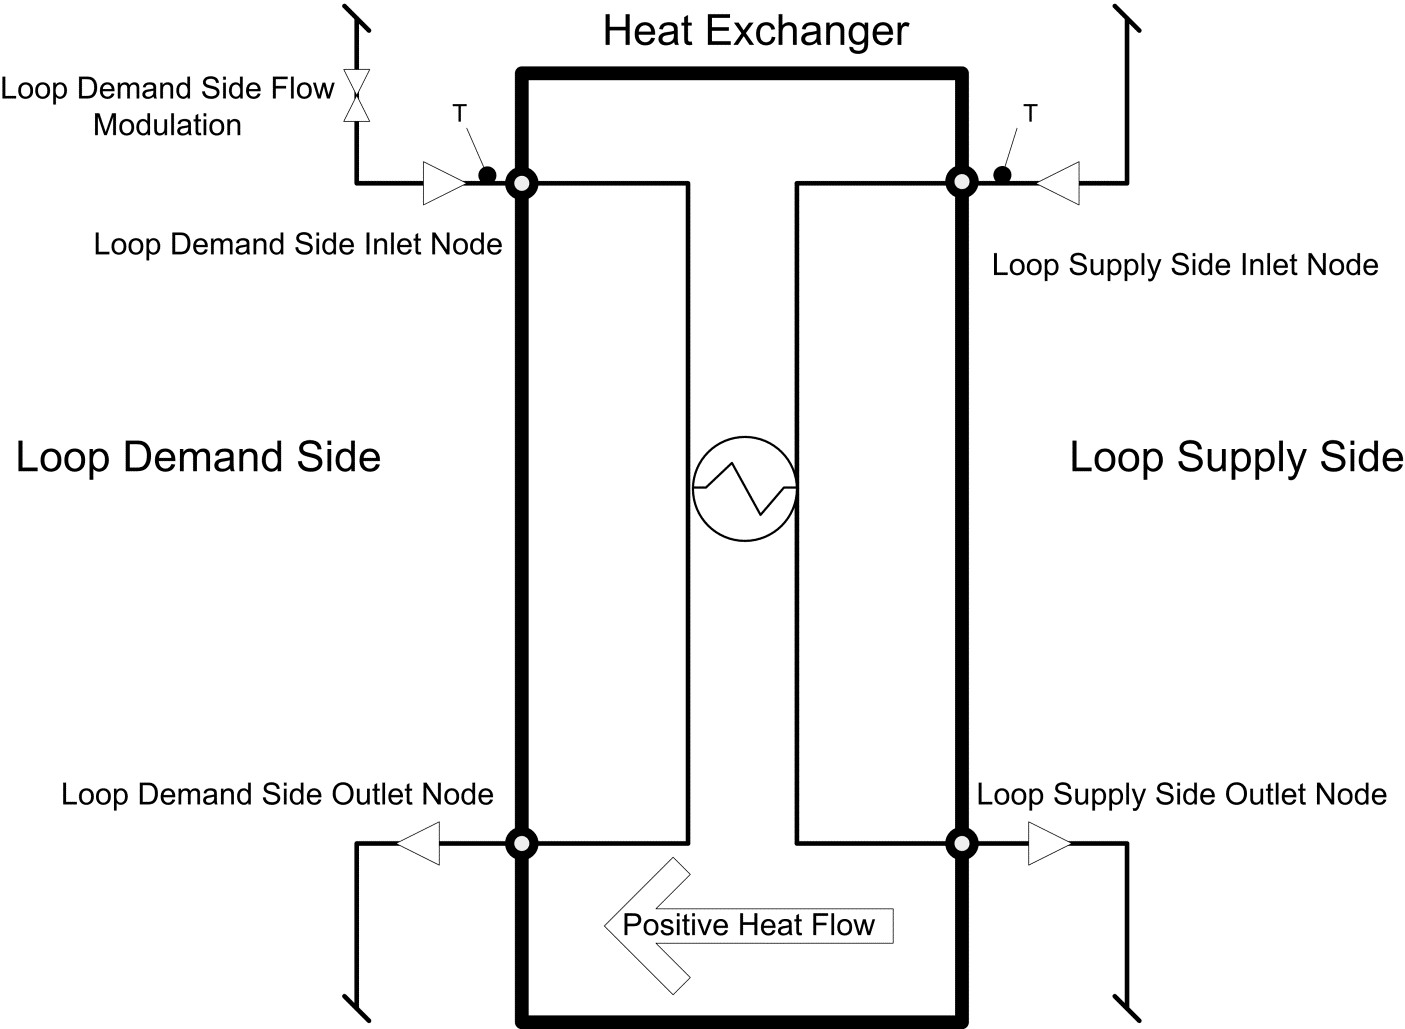 Plant Fluid-to-Fluid Heat Exchanger [fig:plant-fluid-to-fluid-heat-exchanger]